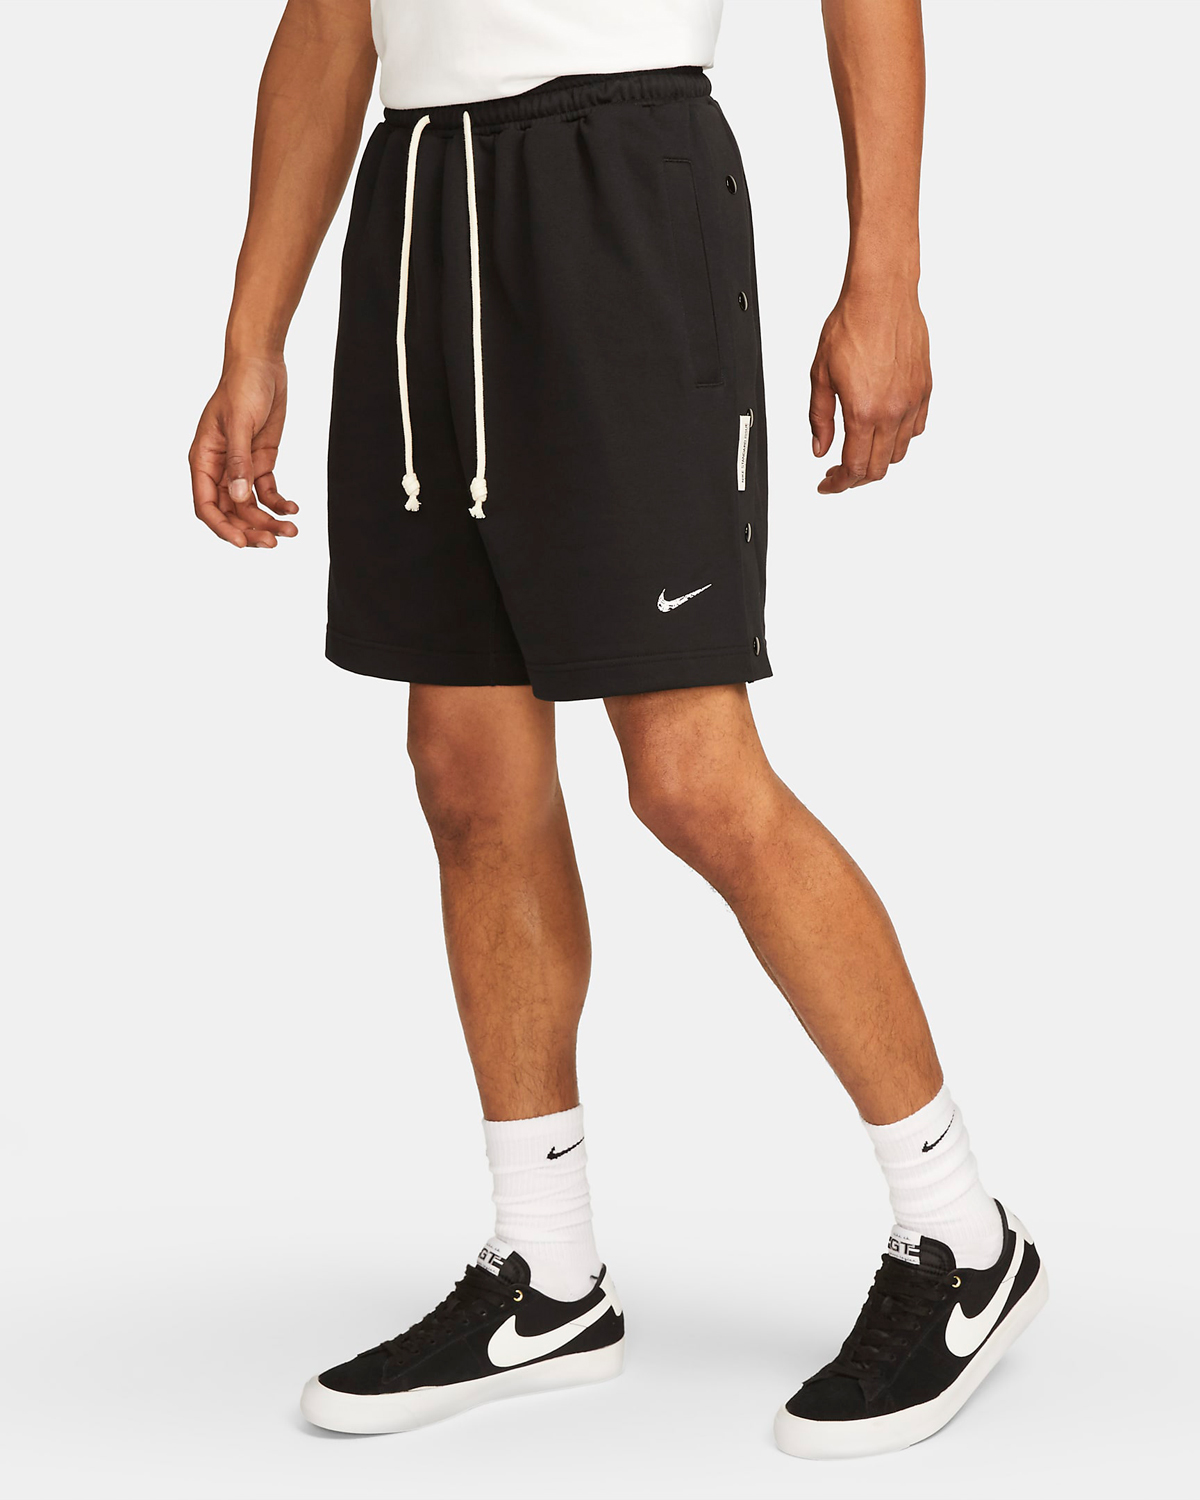 Nike-Standard-Issue-Shorts-Black-White-1